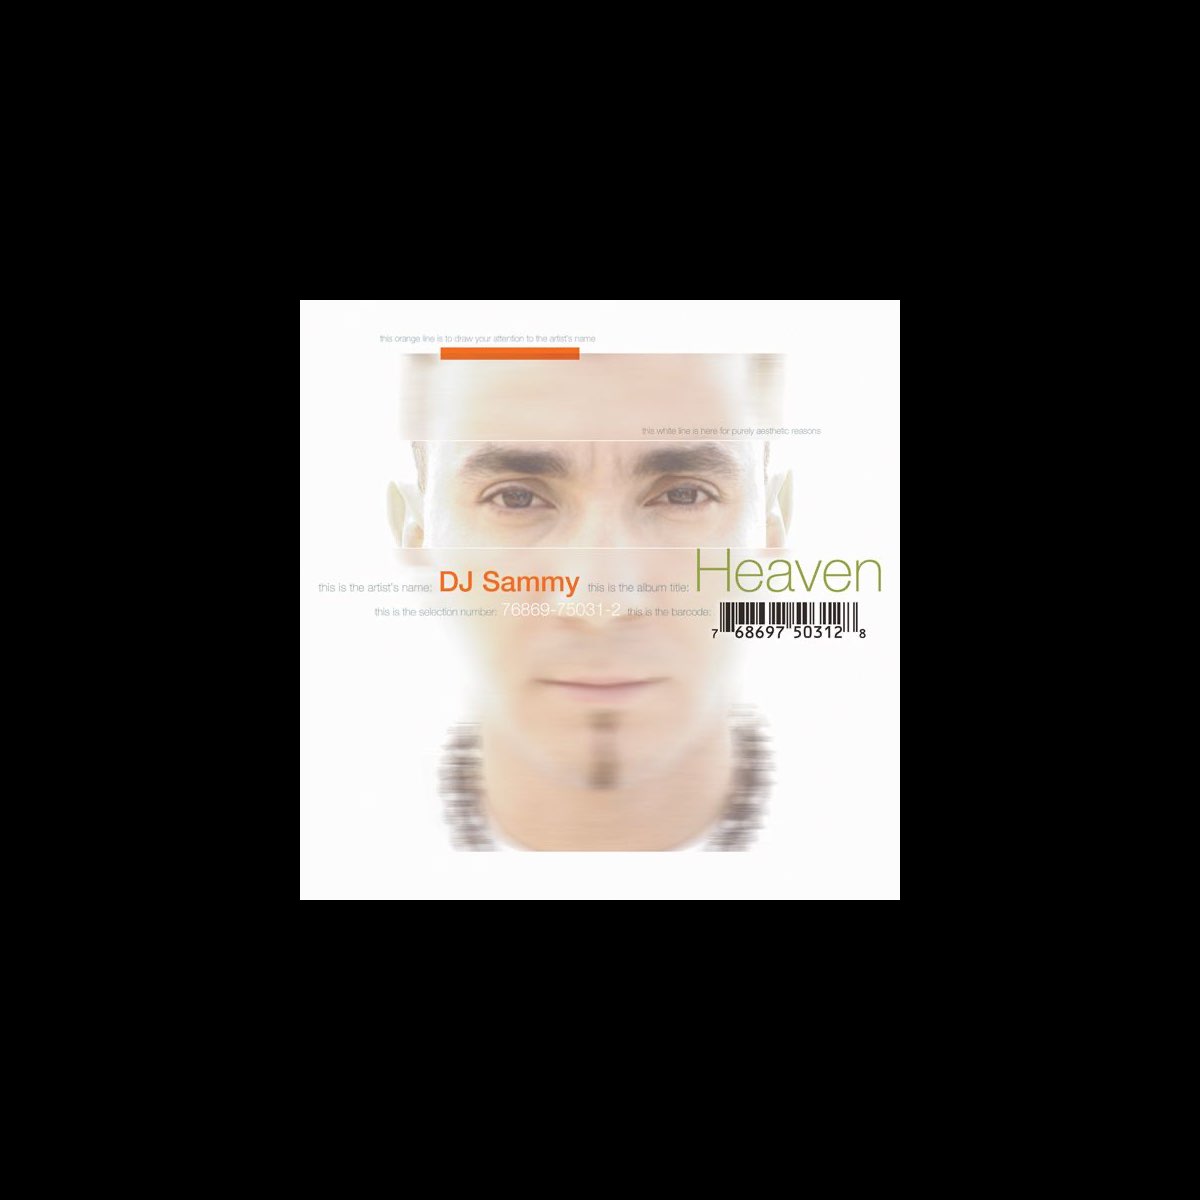 Siren Head - Single - Album by DJ HAVEN - Apple Music